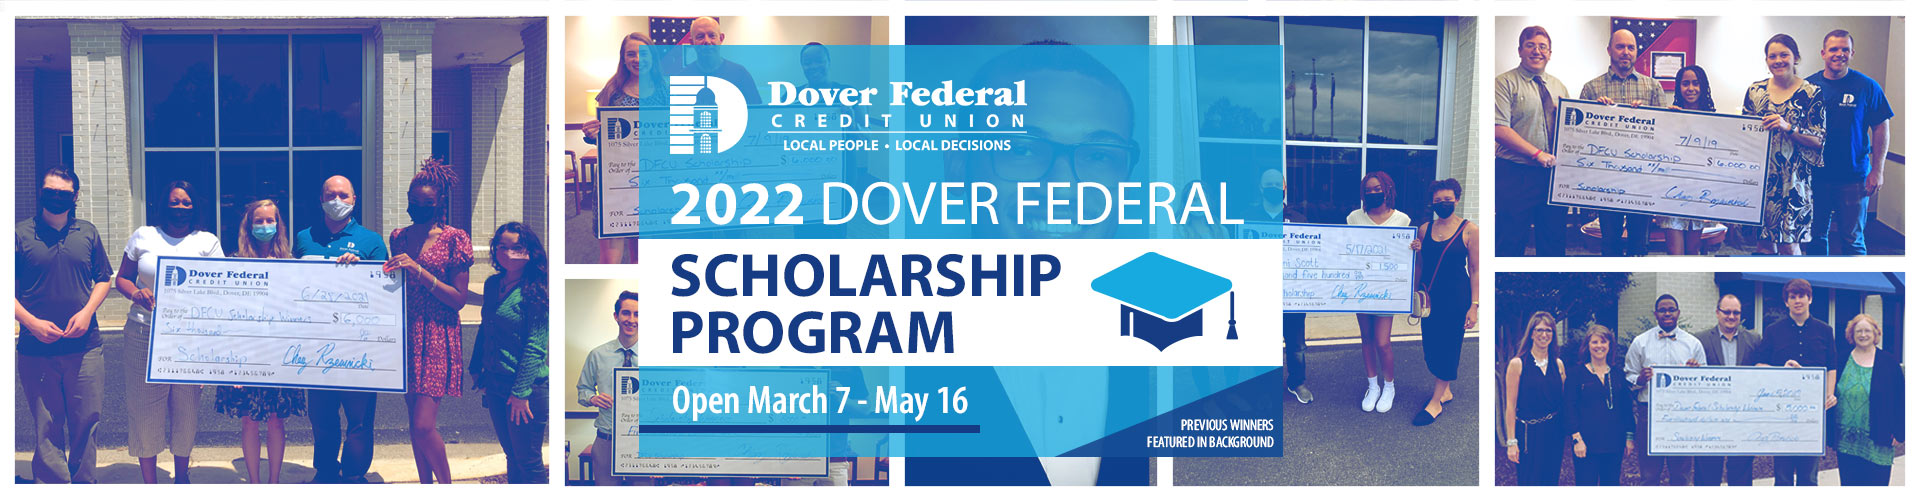 2022 Dover Federal Scholarship Program